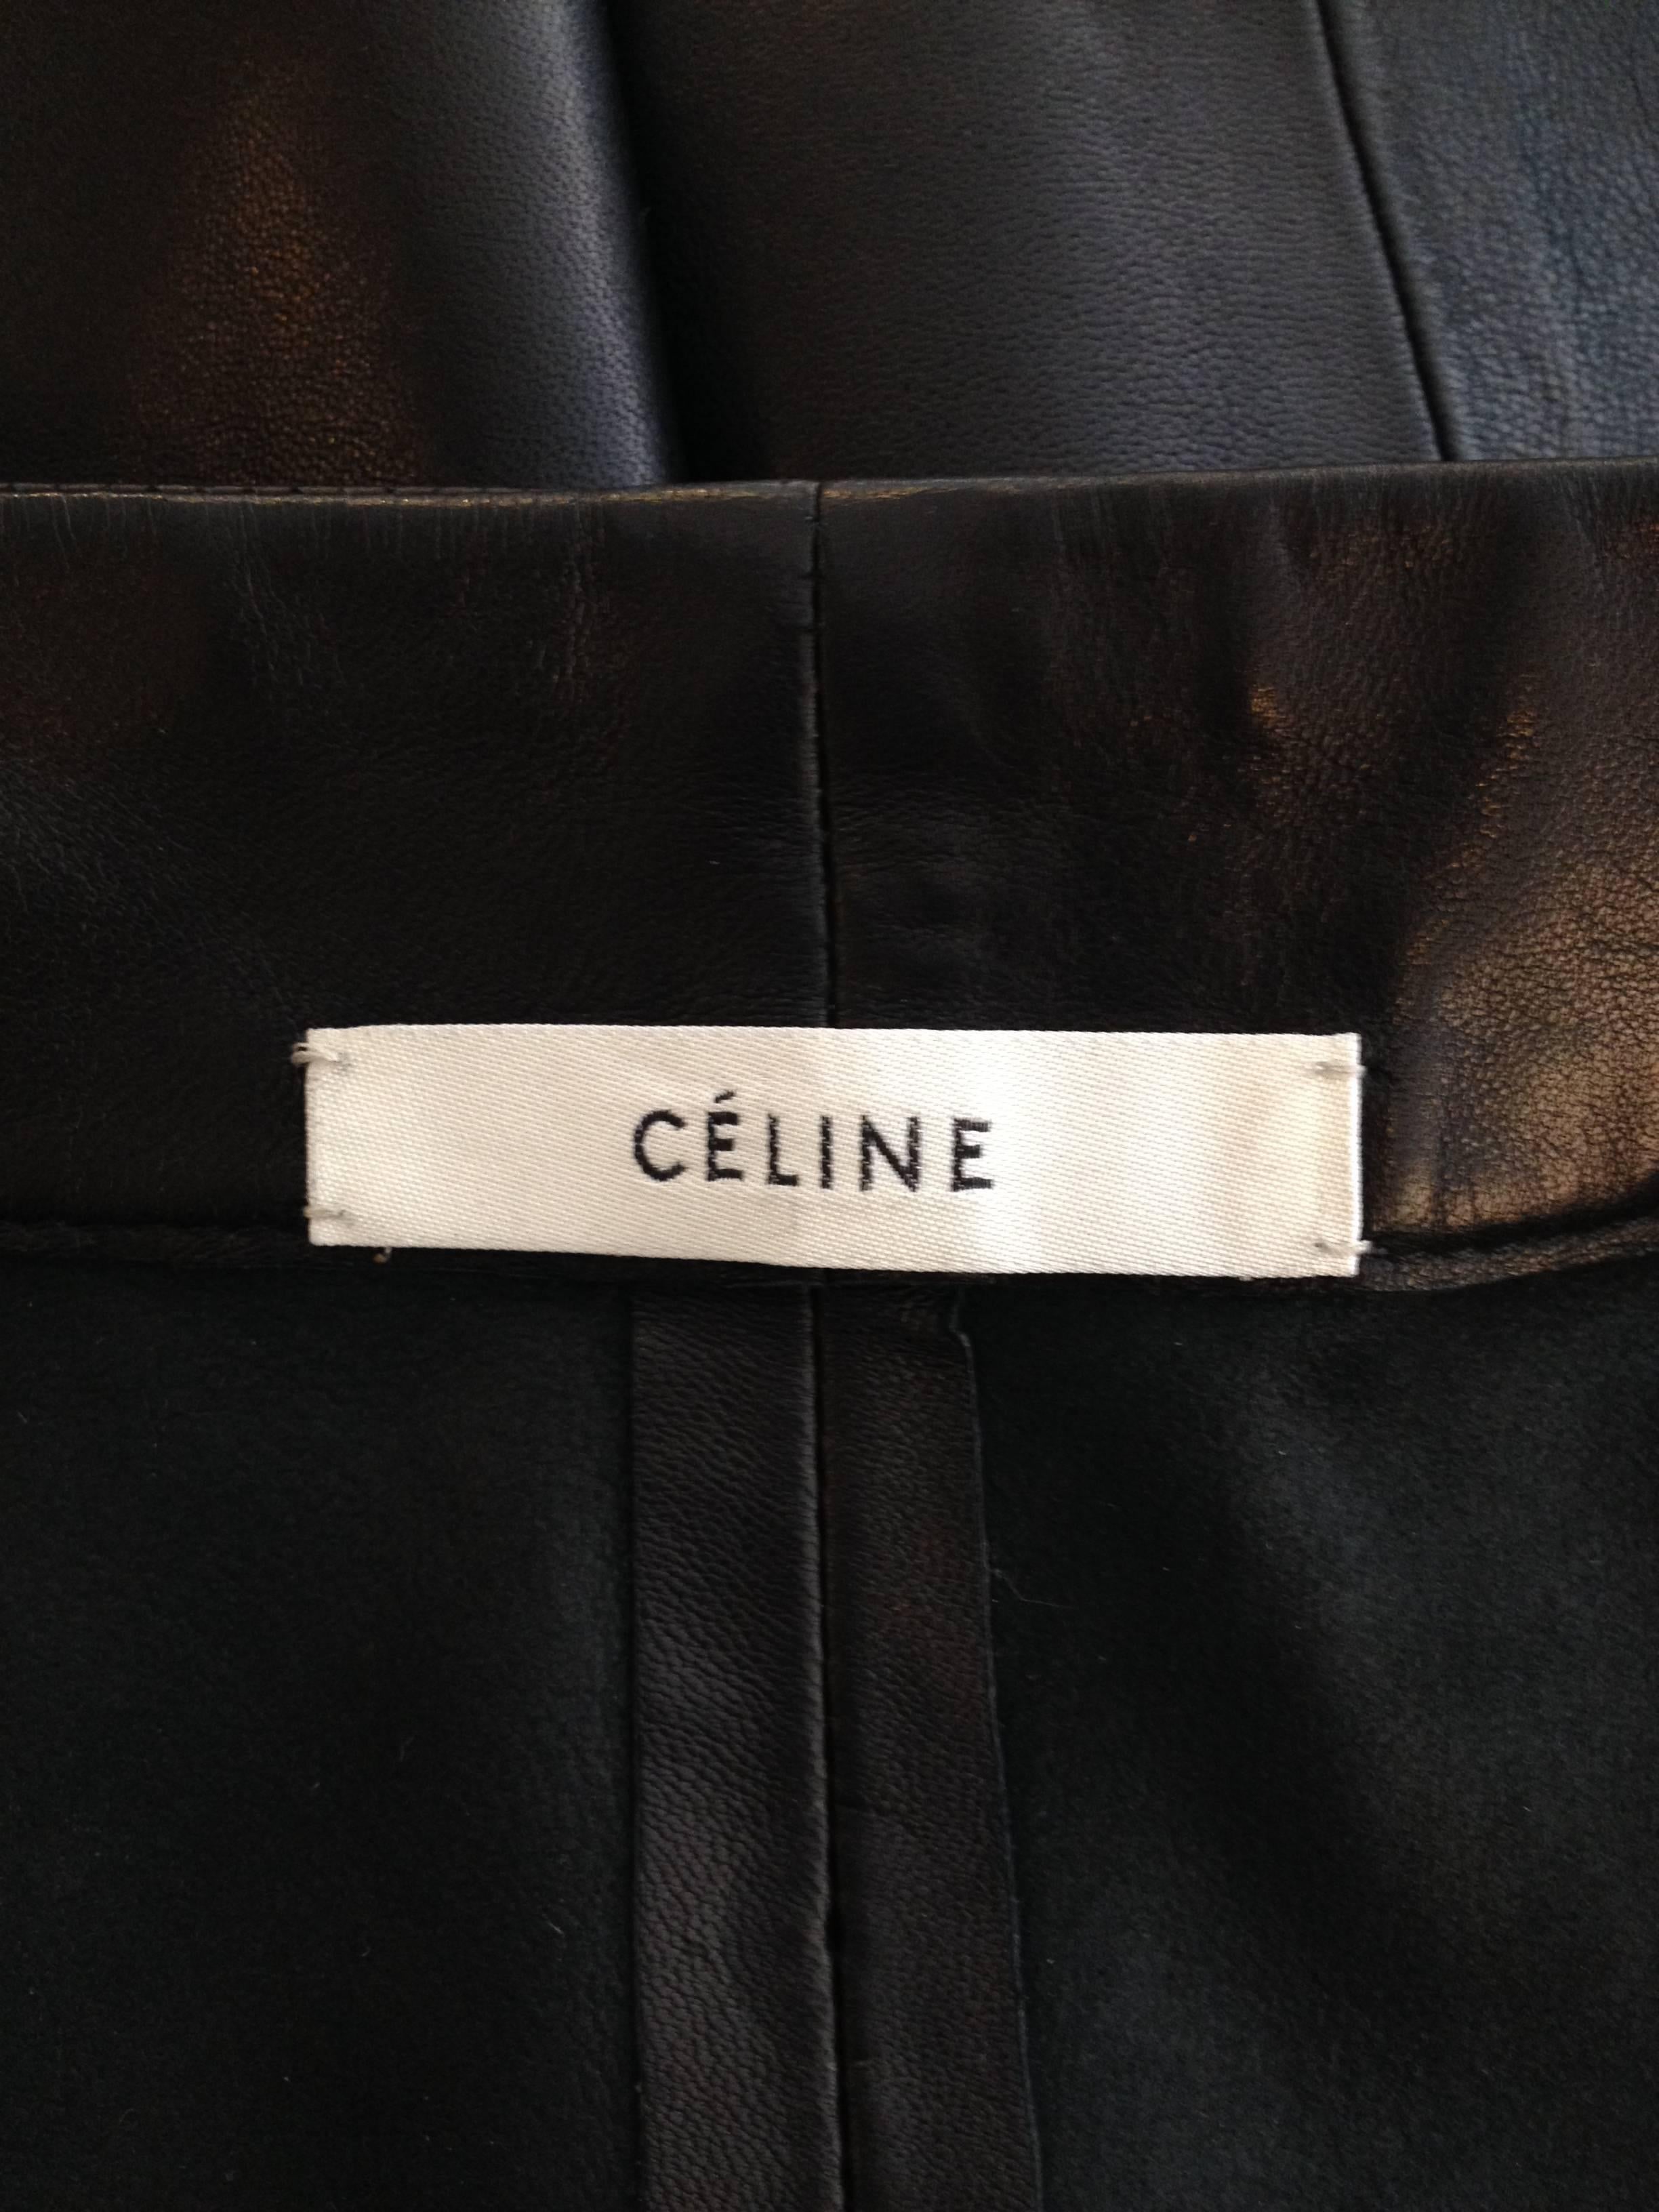 Celine Black Leather Culottes 3